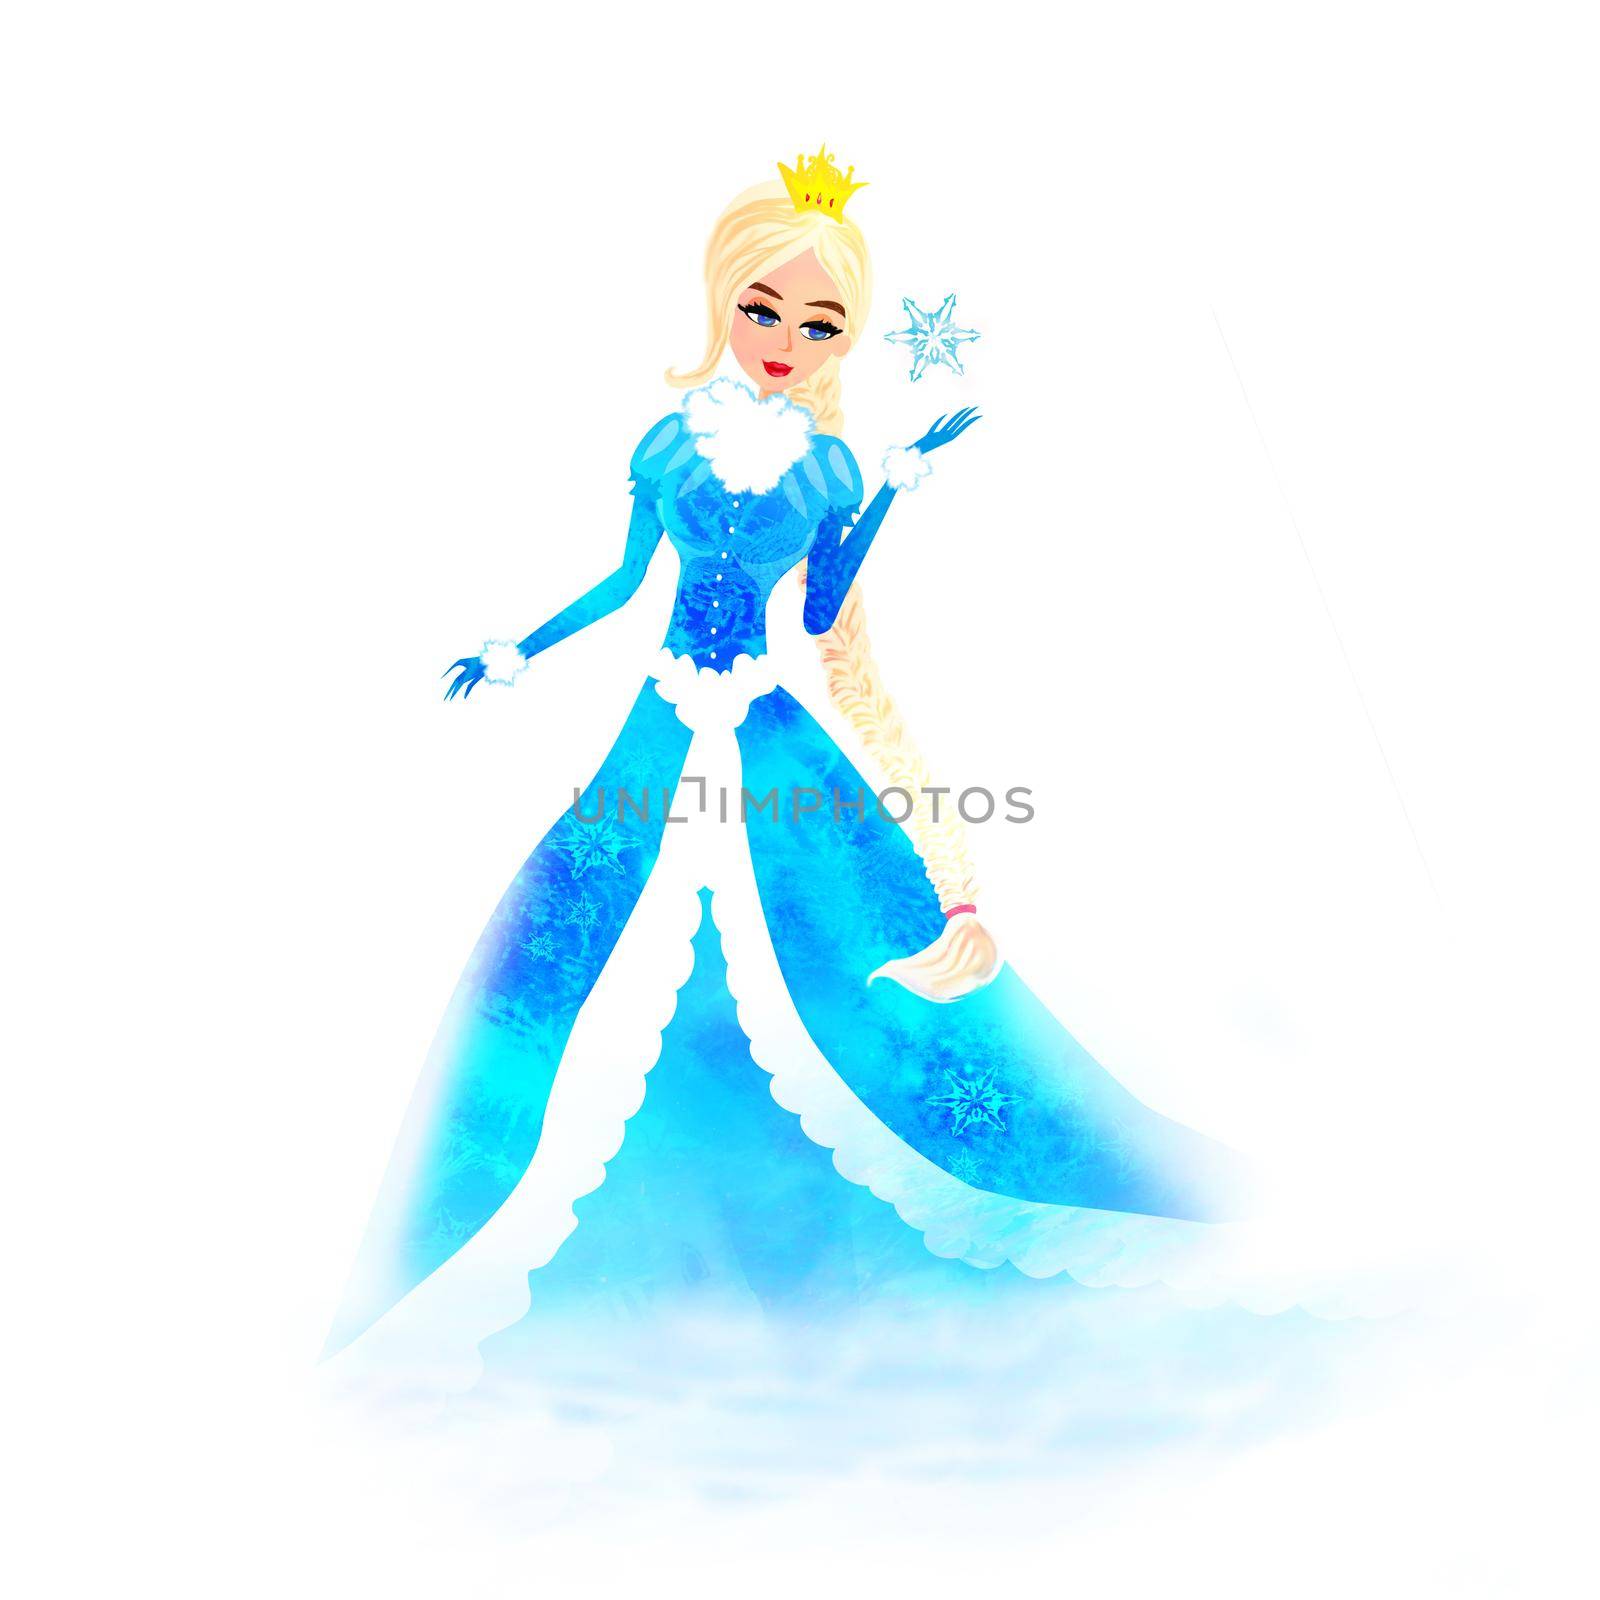 beautiful winter princess catching a snowflake by JackyBrown